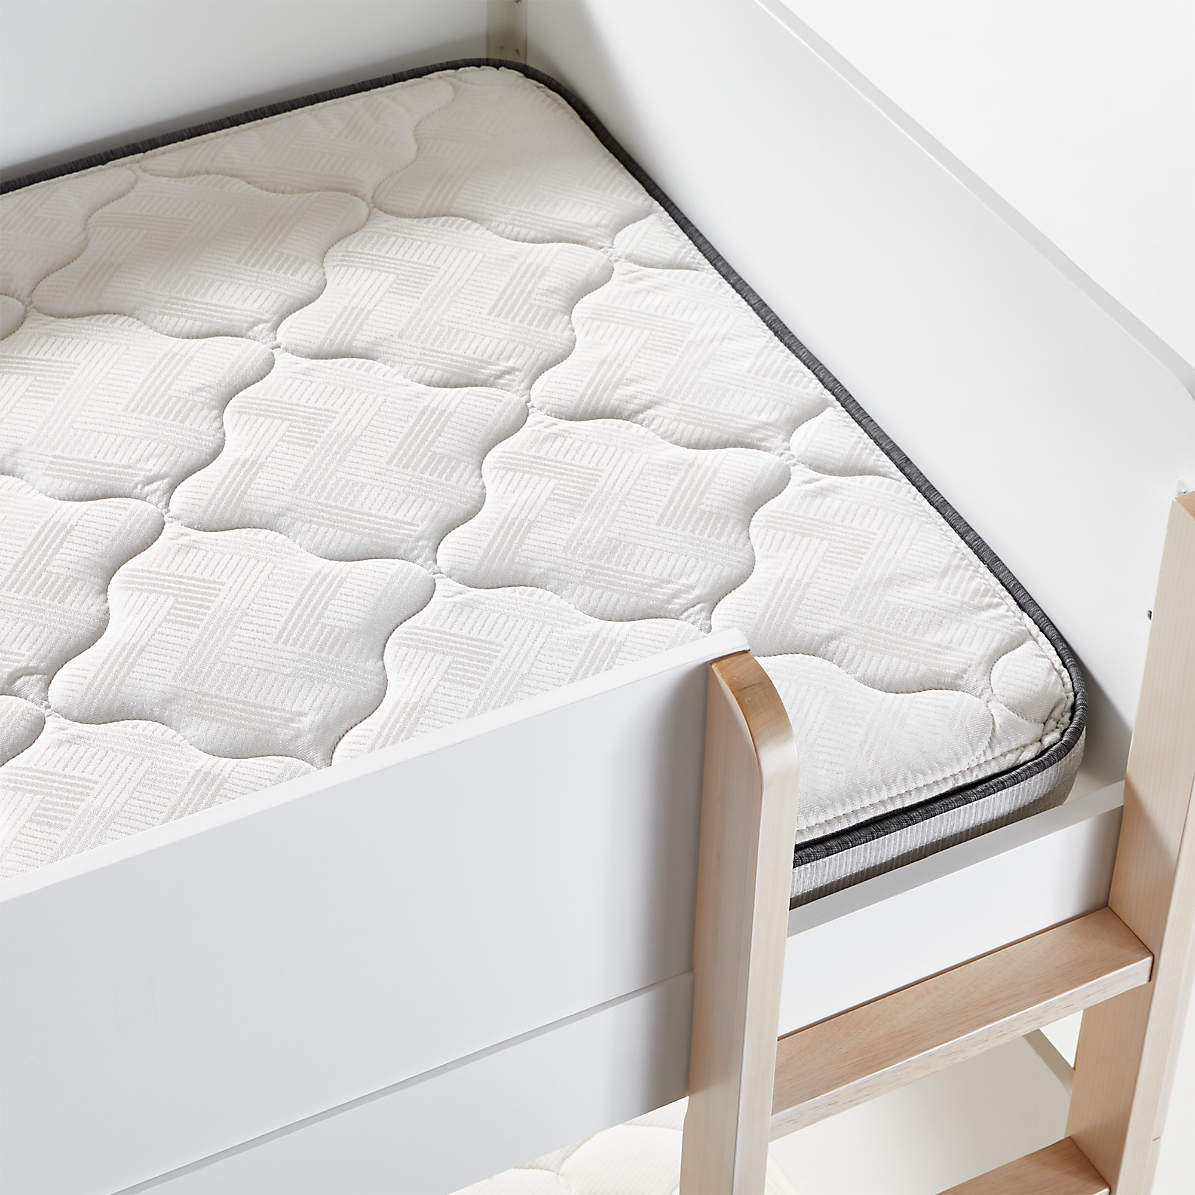 Simmons Beautyrest Foam Twin Bunk, What Kind Of Mattress For Bunk Beds